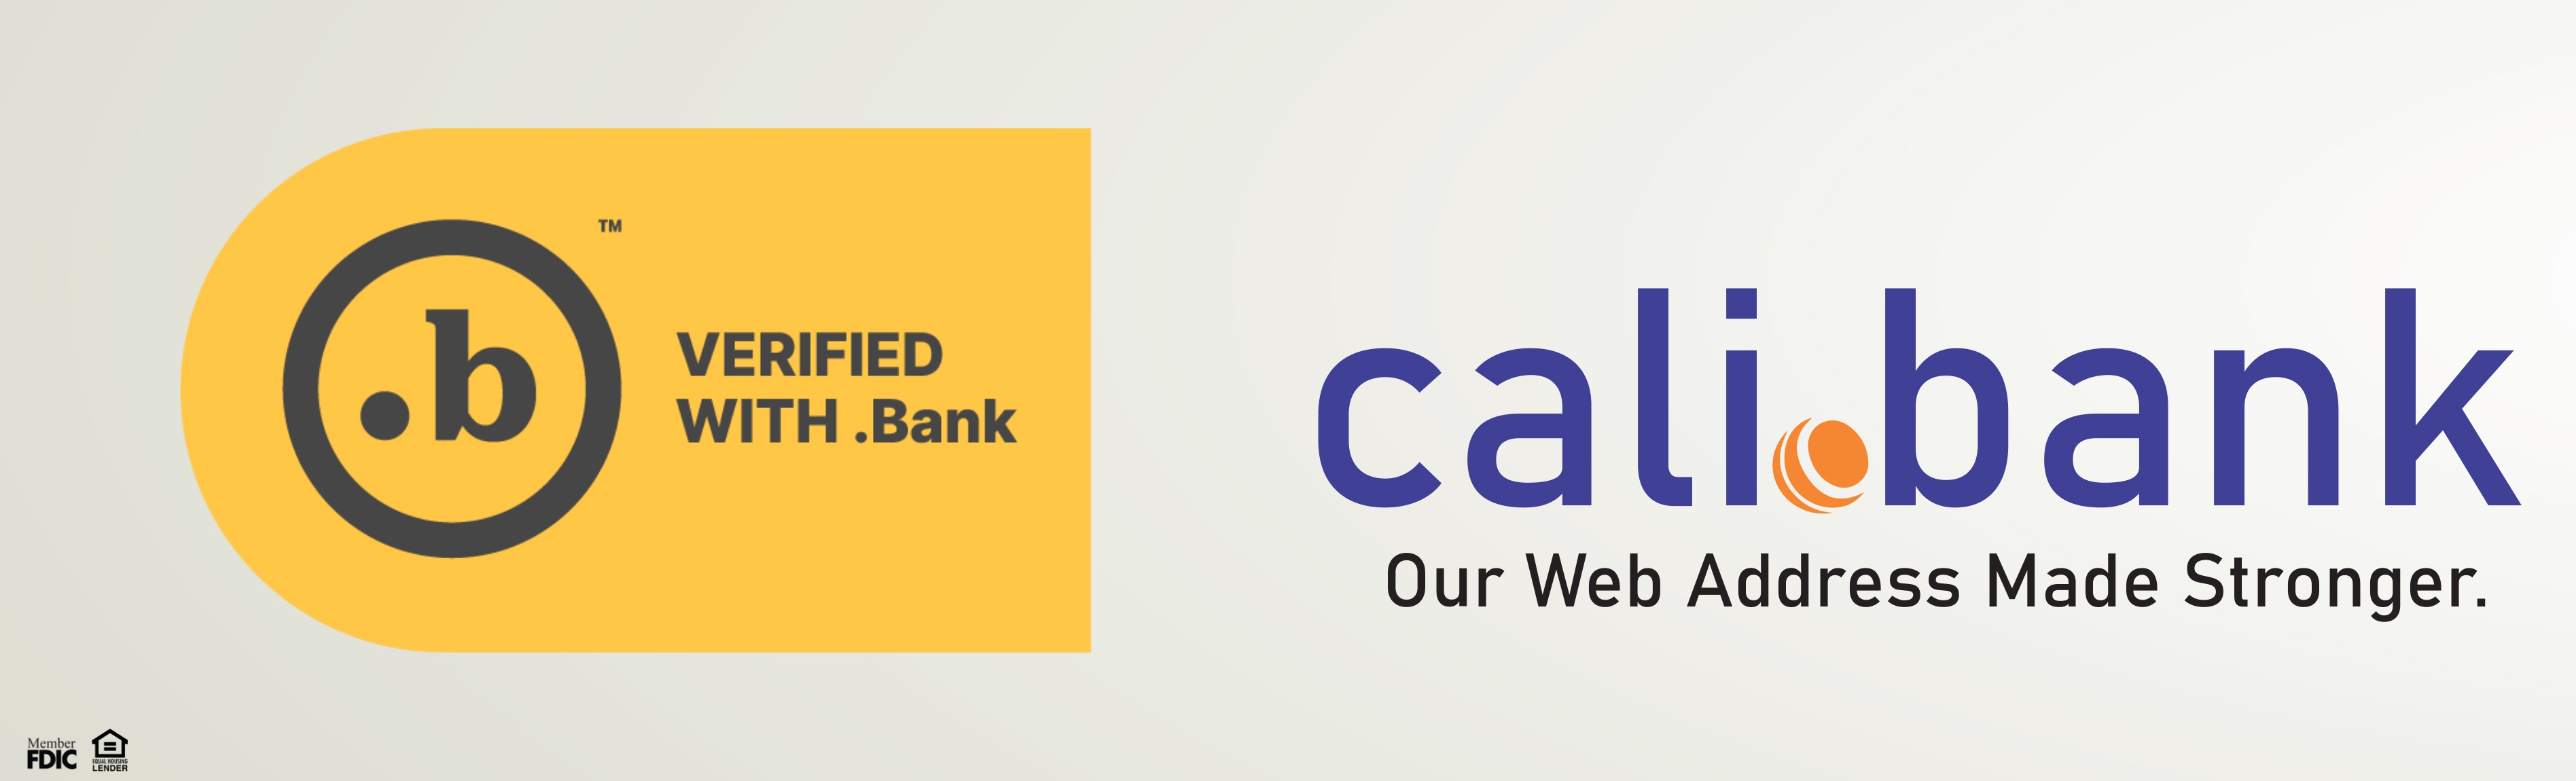 cali.bank logo with .bank verified logo